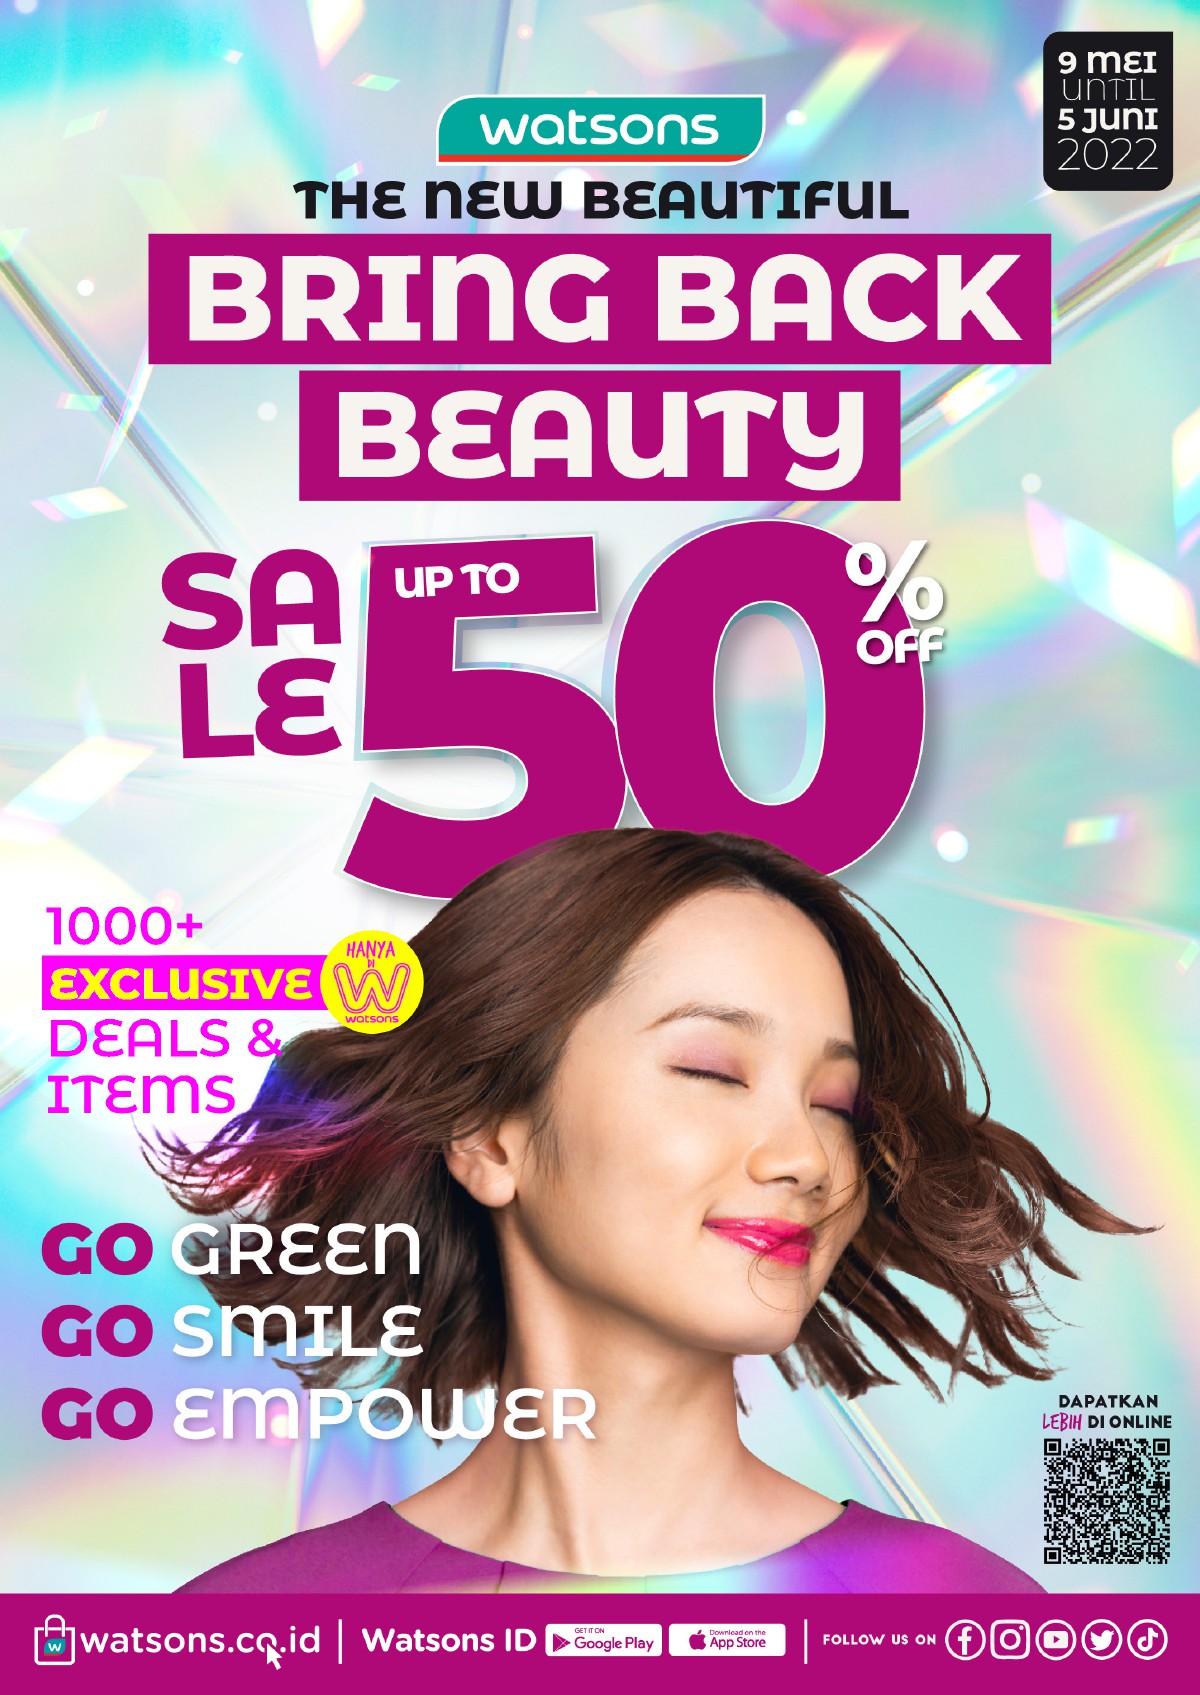 Katalog Belanja Watsons Terbaru - Bring Back Beauty | Discount Up to 50% on your favorite products